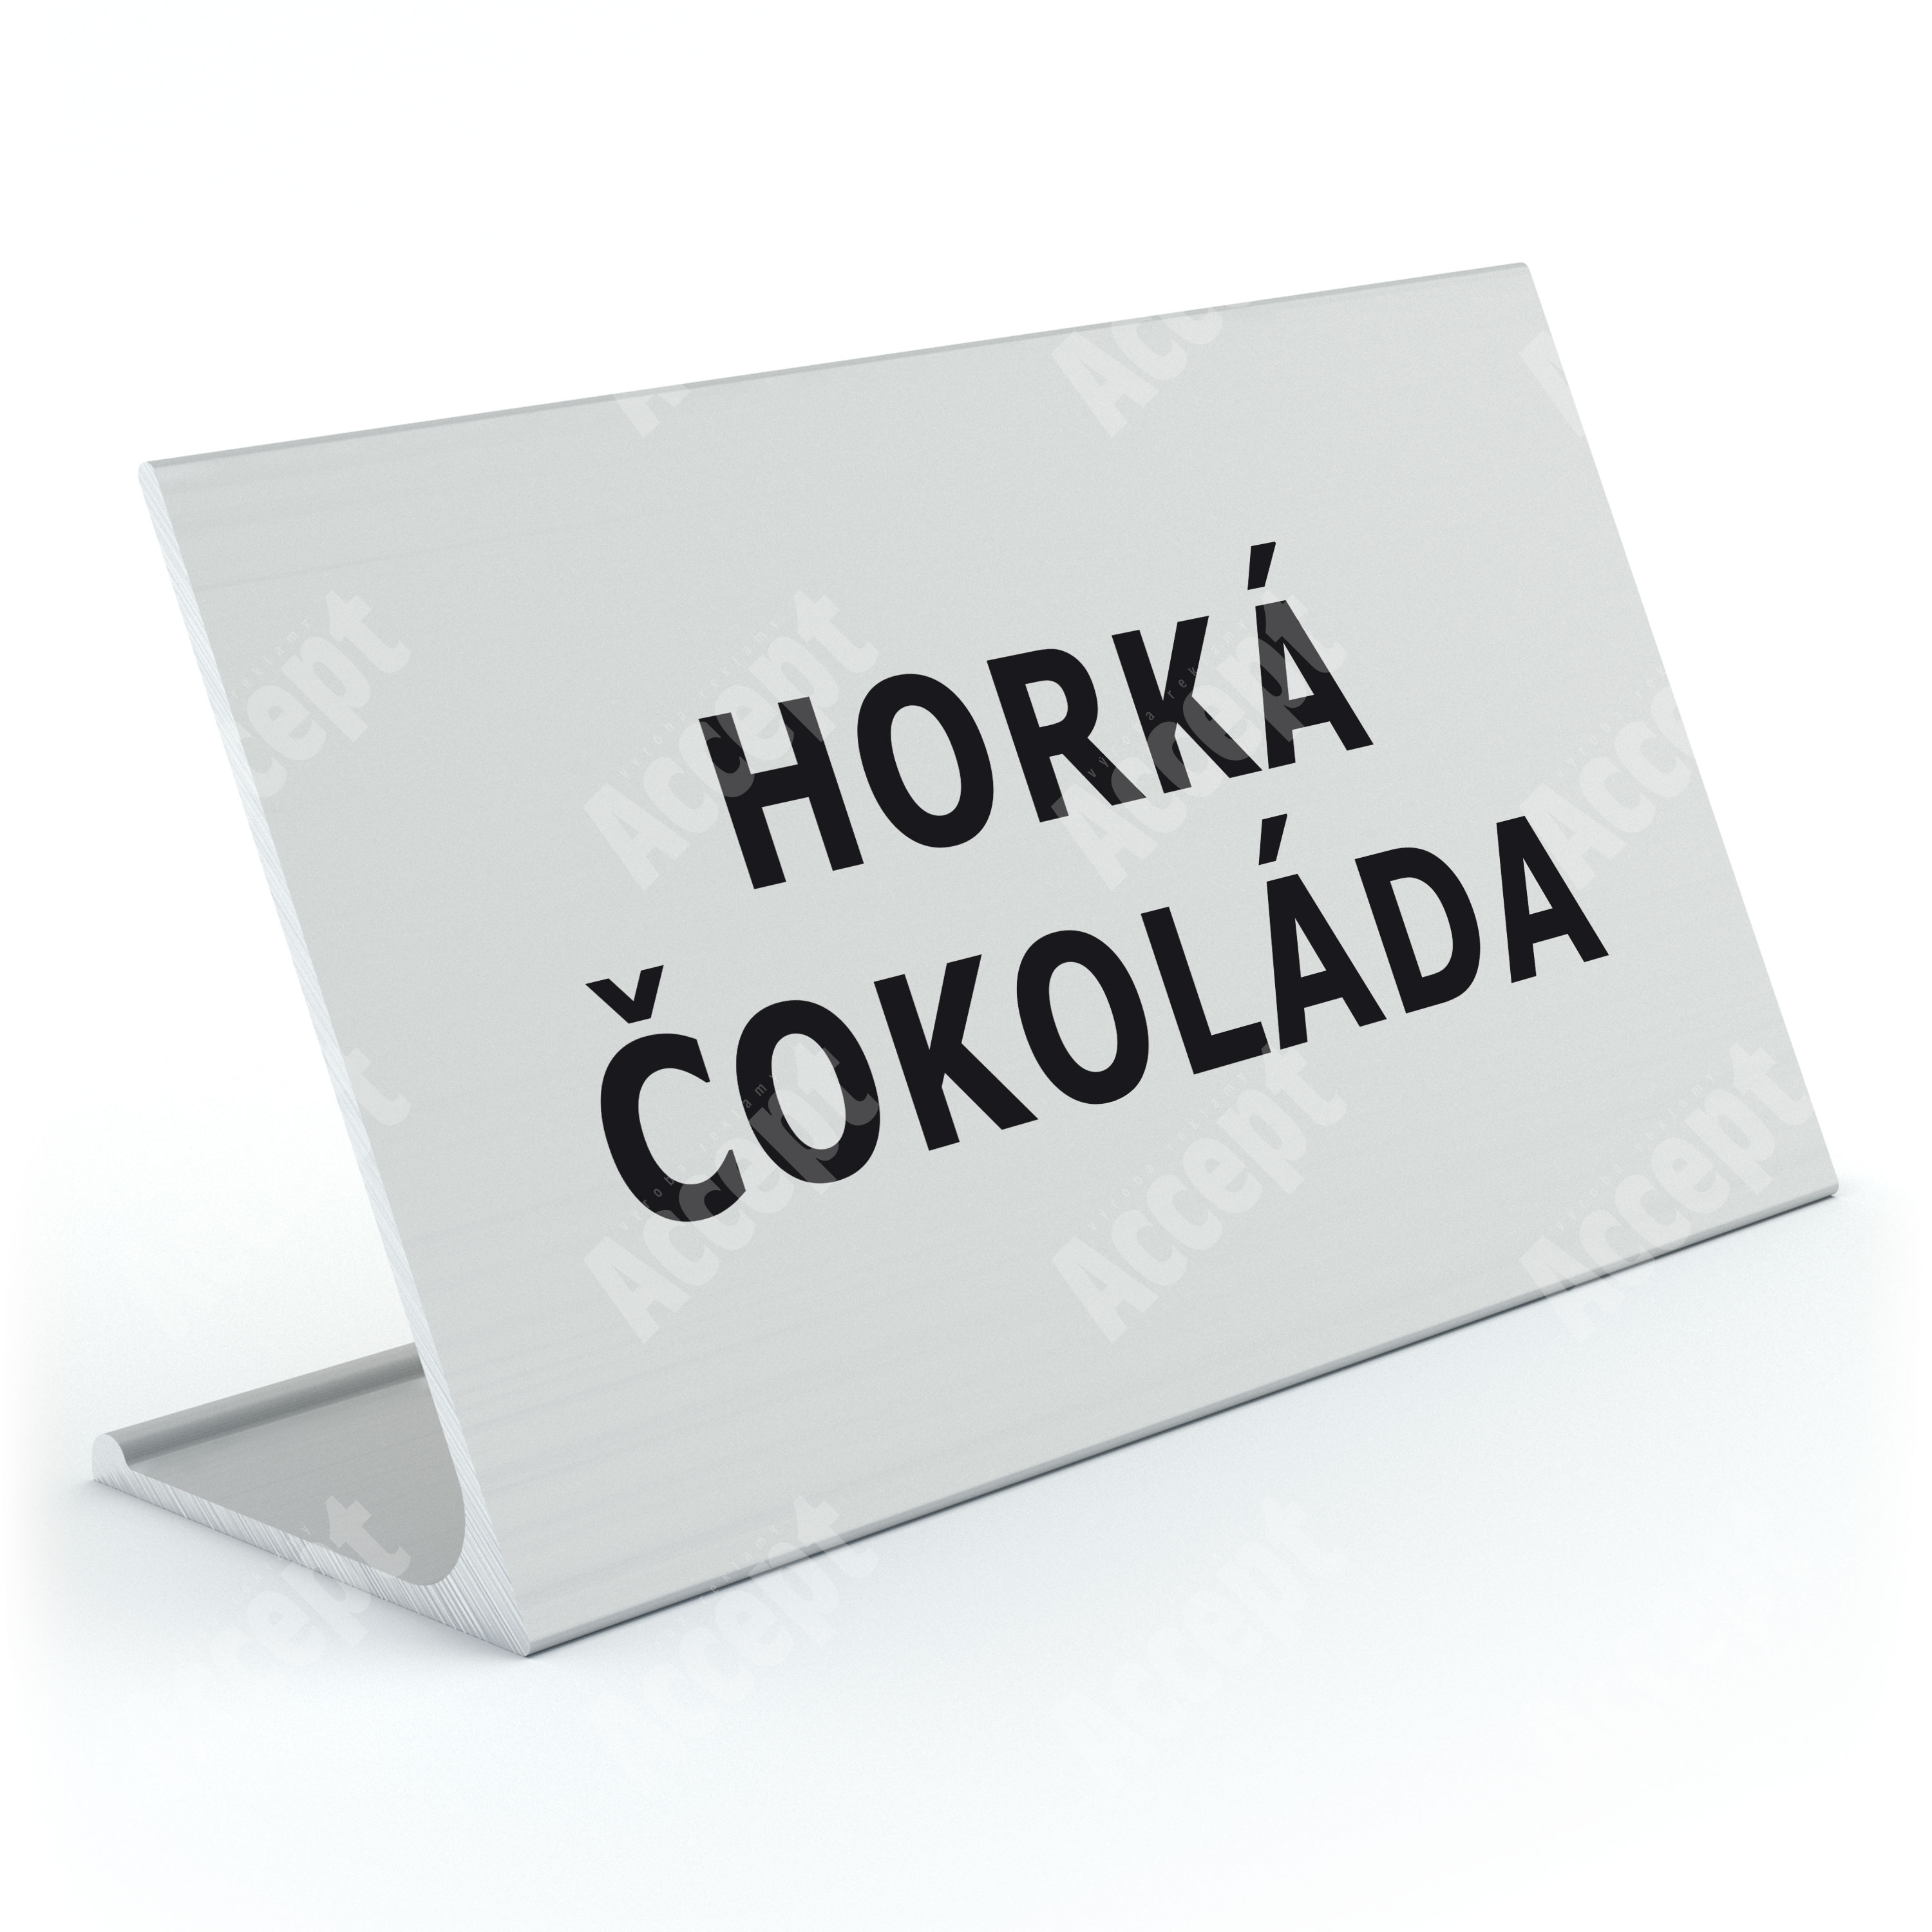 Informan stojnek D-62 "HORK OKOLDA"